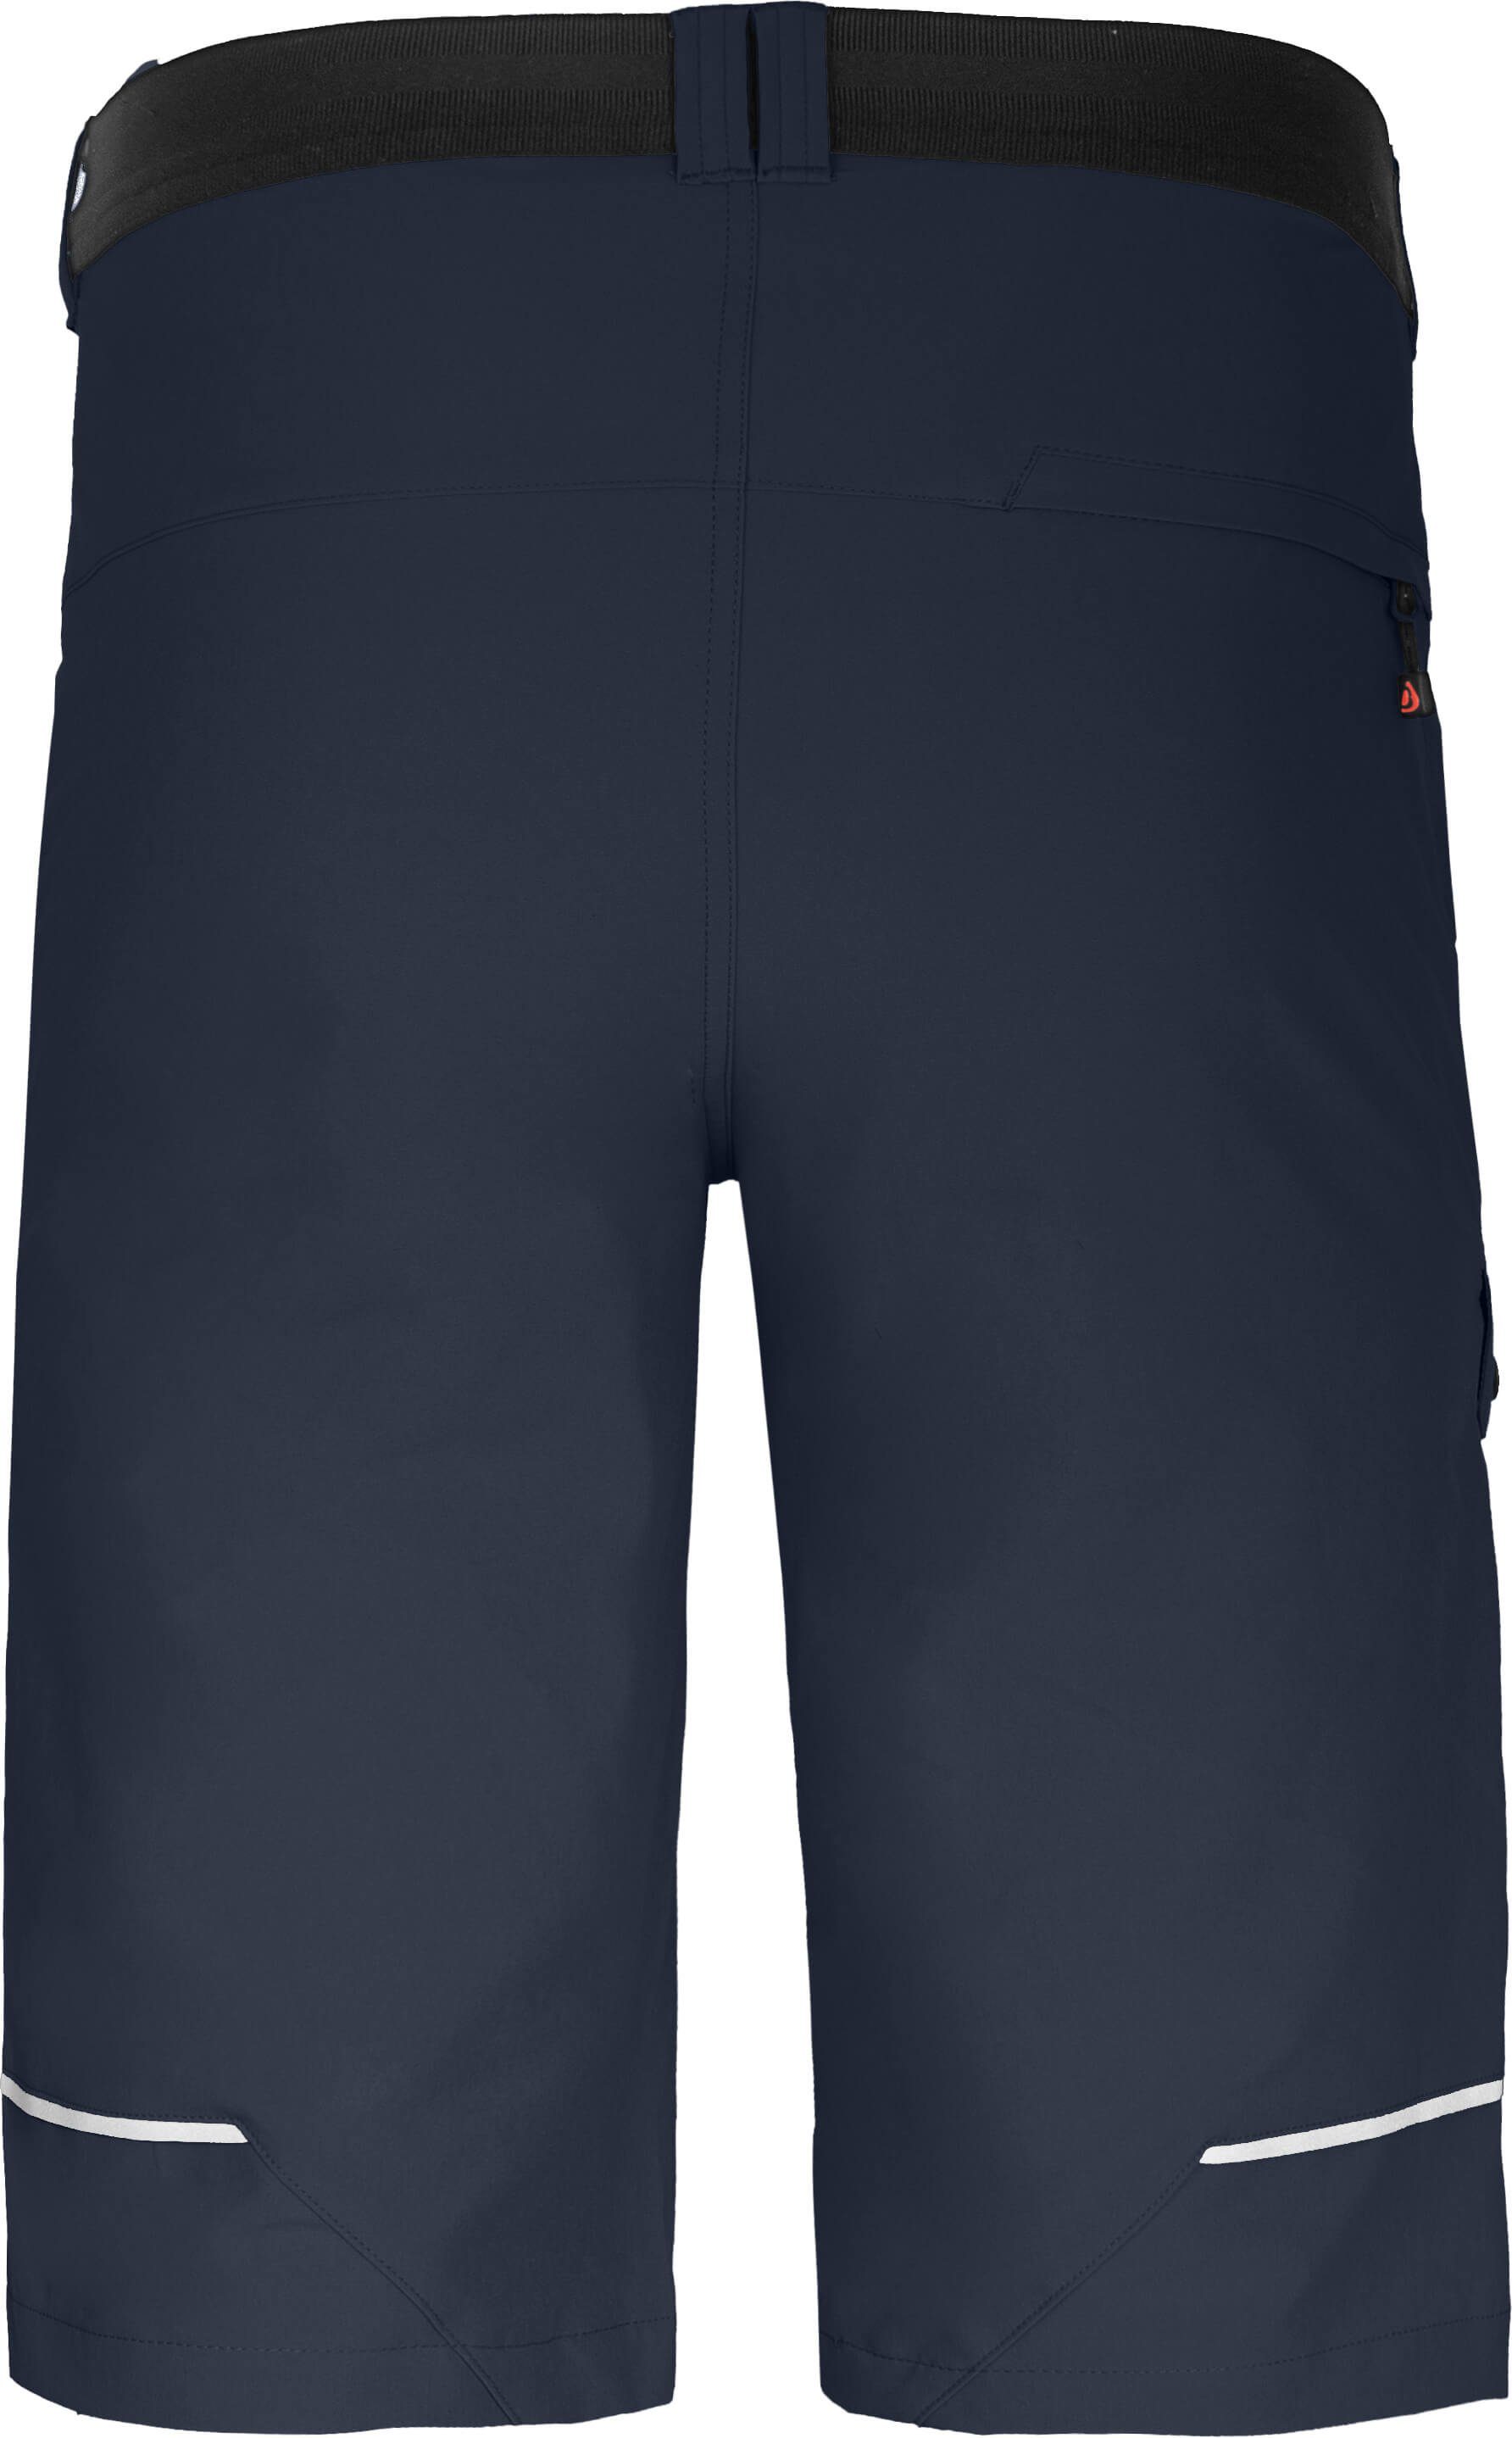 navy Normalgrößen, Bermuda elastisch, Herren 8 Wandershorts, Taschen, Outdoorhose recycelt, blau COMFORT Bergson FROSLEV